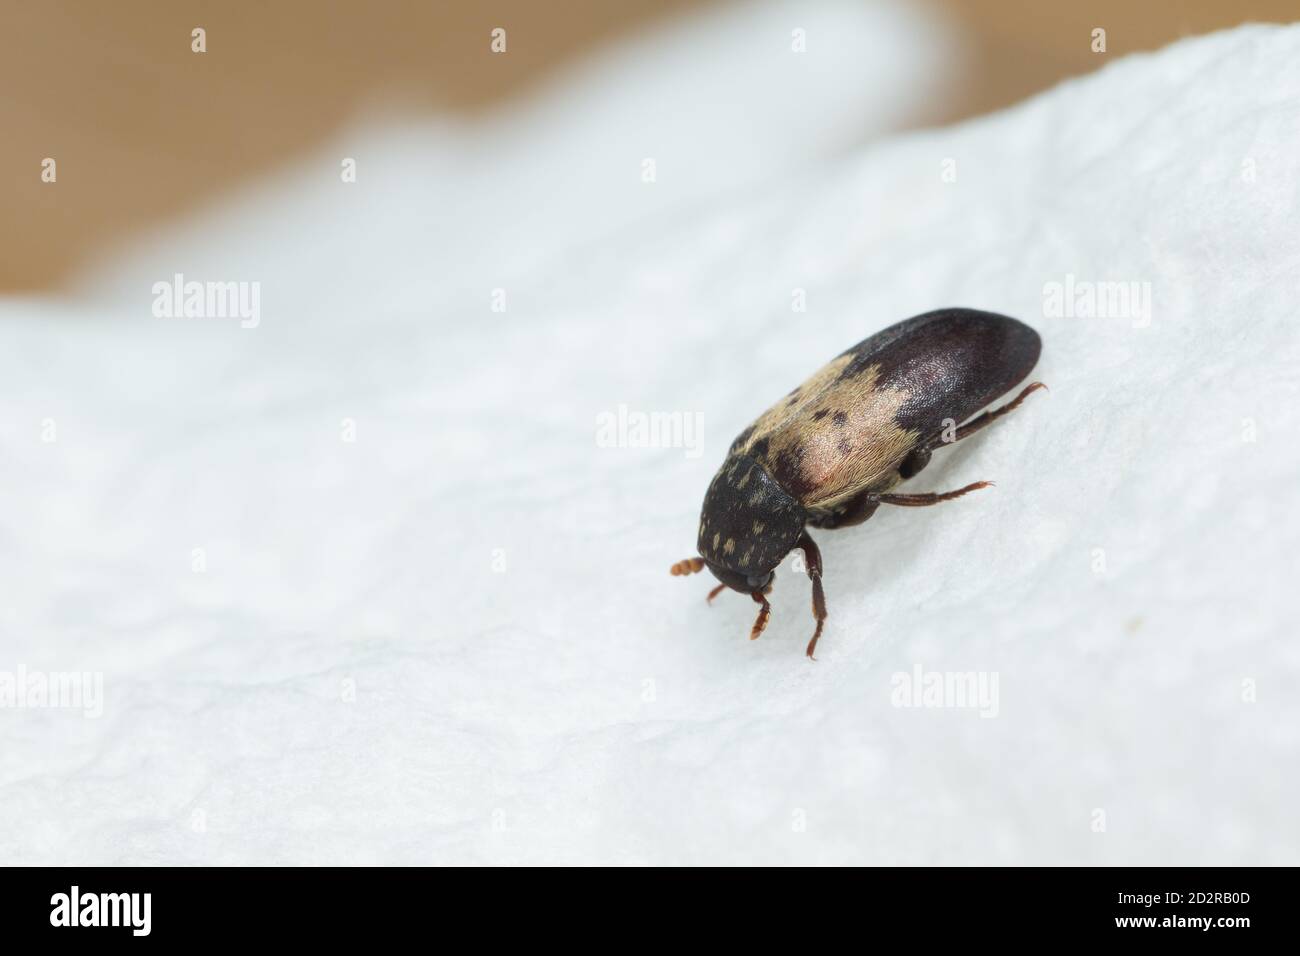 Larder beetle (Dermestes lardarius) Stock Photo